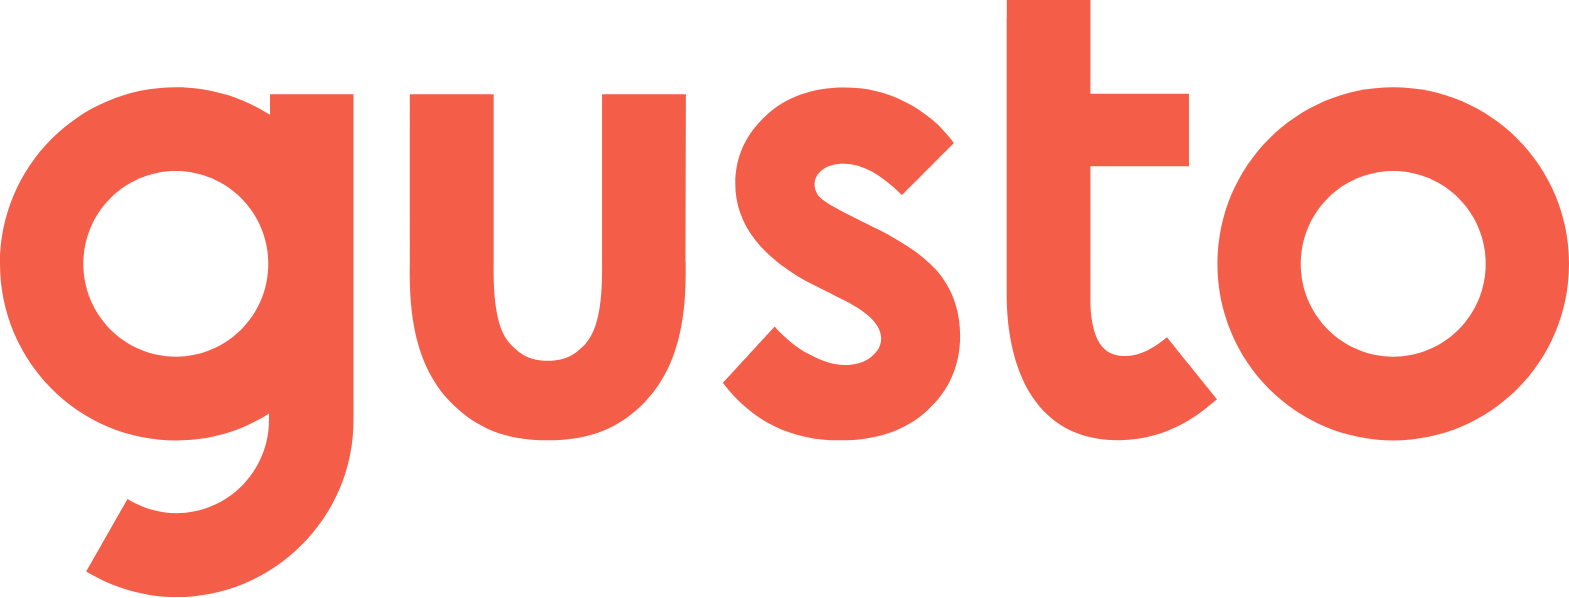 Gusto logo (transparent PNG)